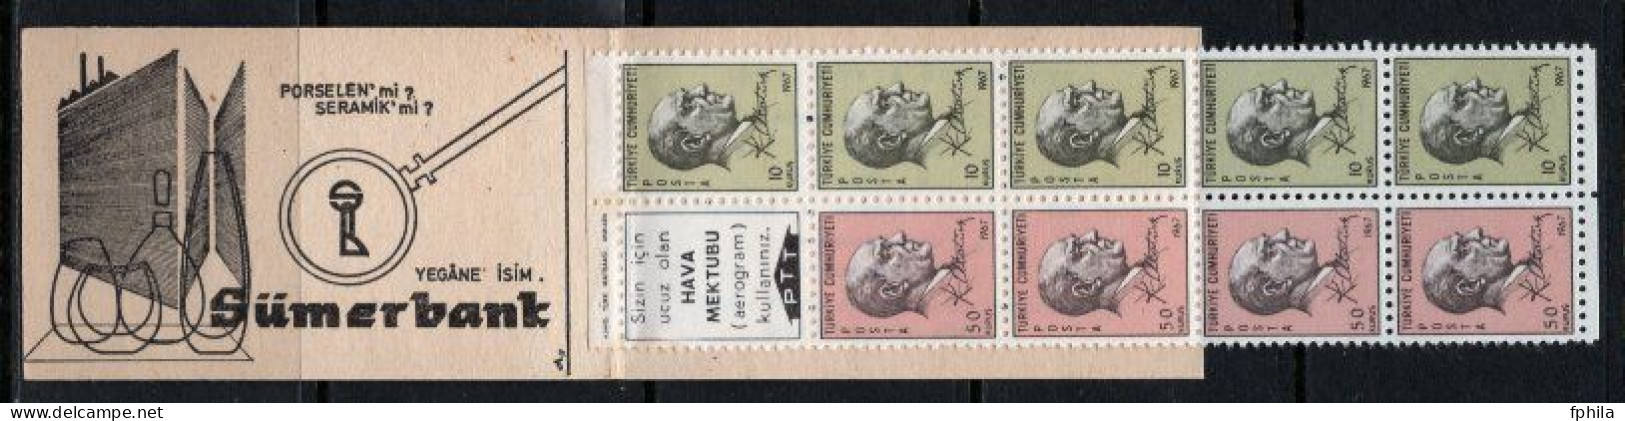 1967 TURKEY ATATURK REGULAR ISSUE STAMPS 4x50k, 5x10k BOOKLET MNH ** - Postzegelboekjes